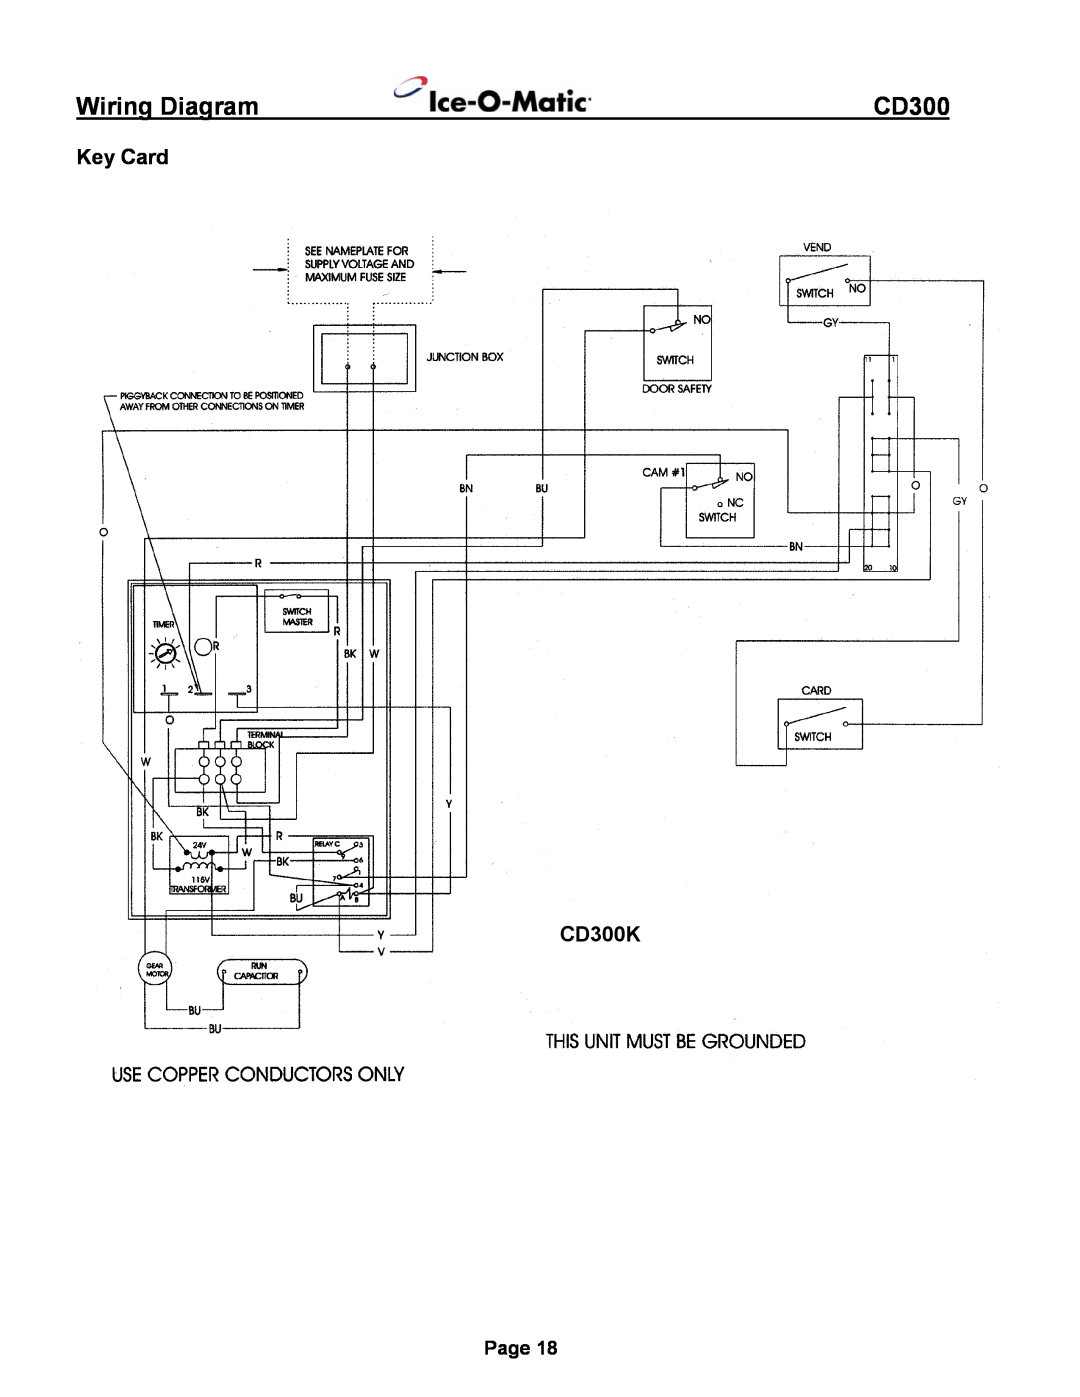 Ice-O-Matic installation manual Key Card CD300K, Wiring Diagram 